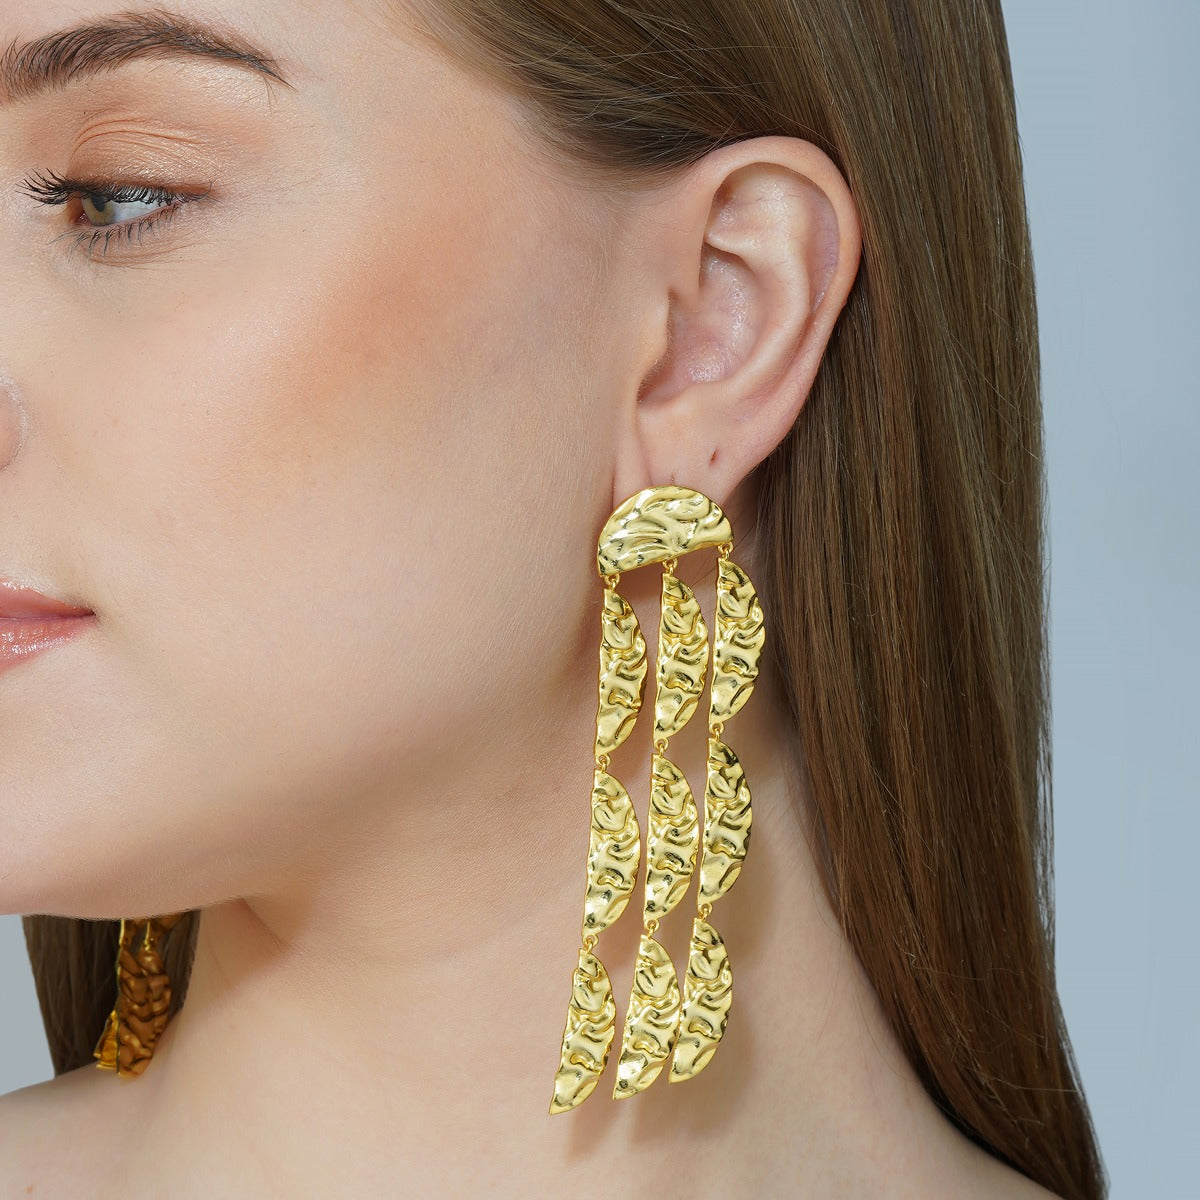 Gold Power Statement Earrings